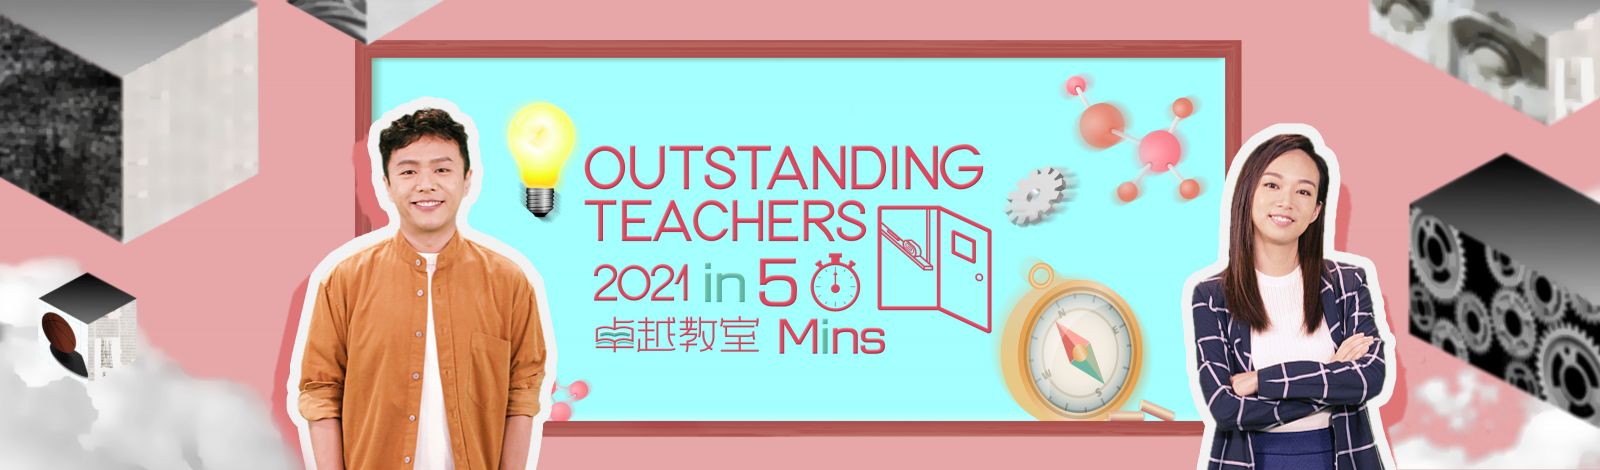 Outstanding Teachers